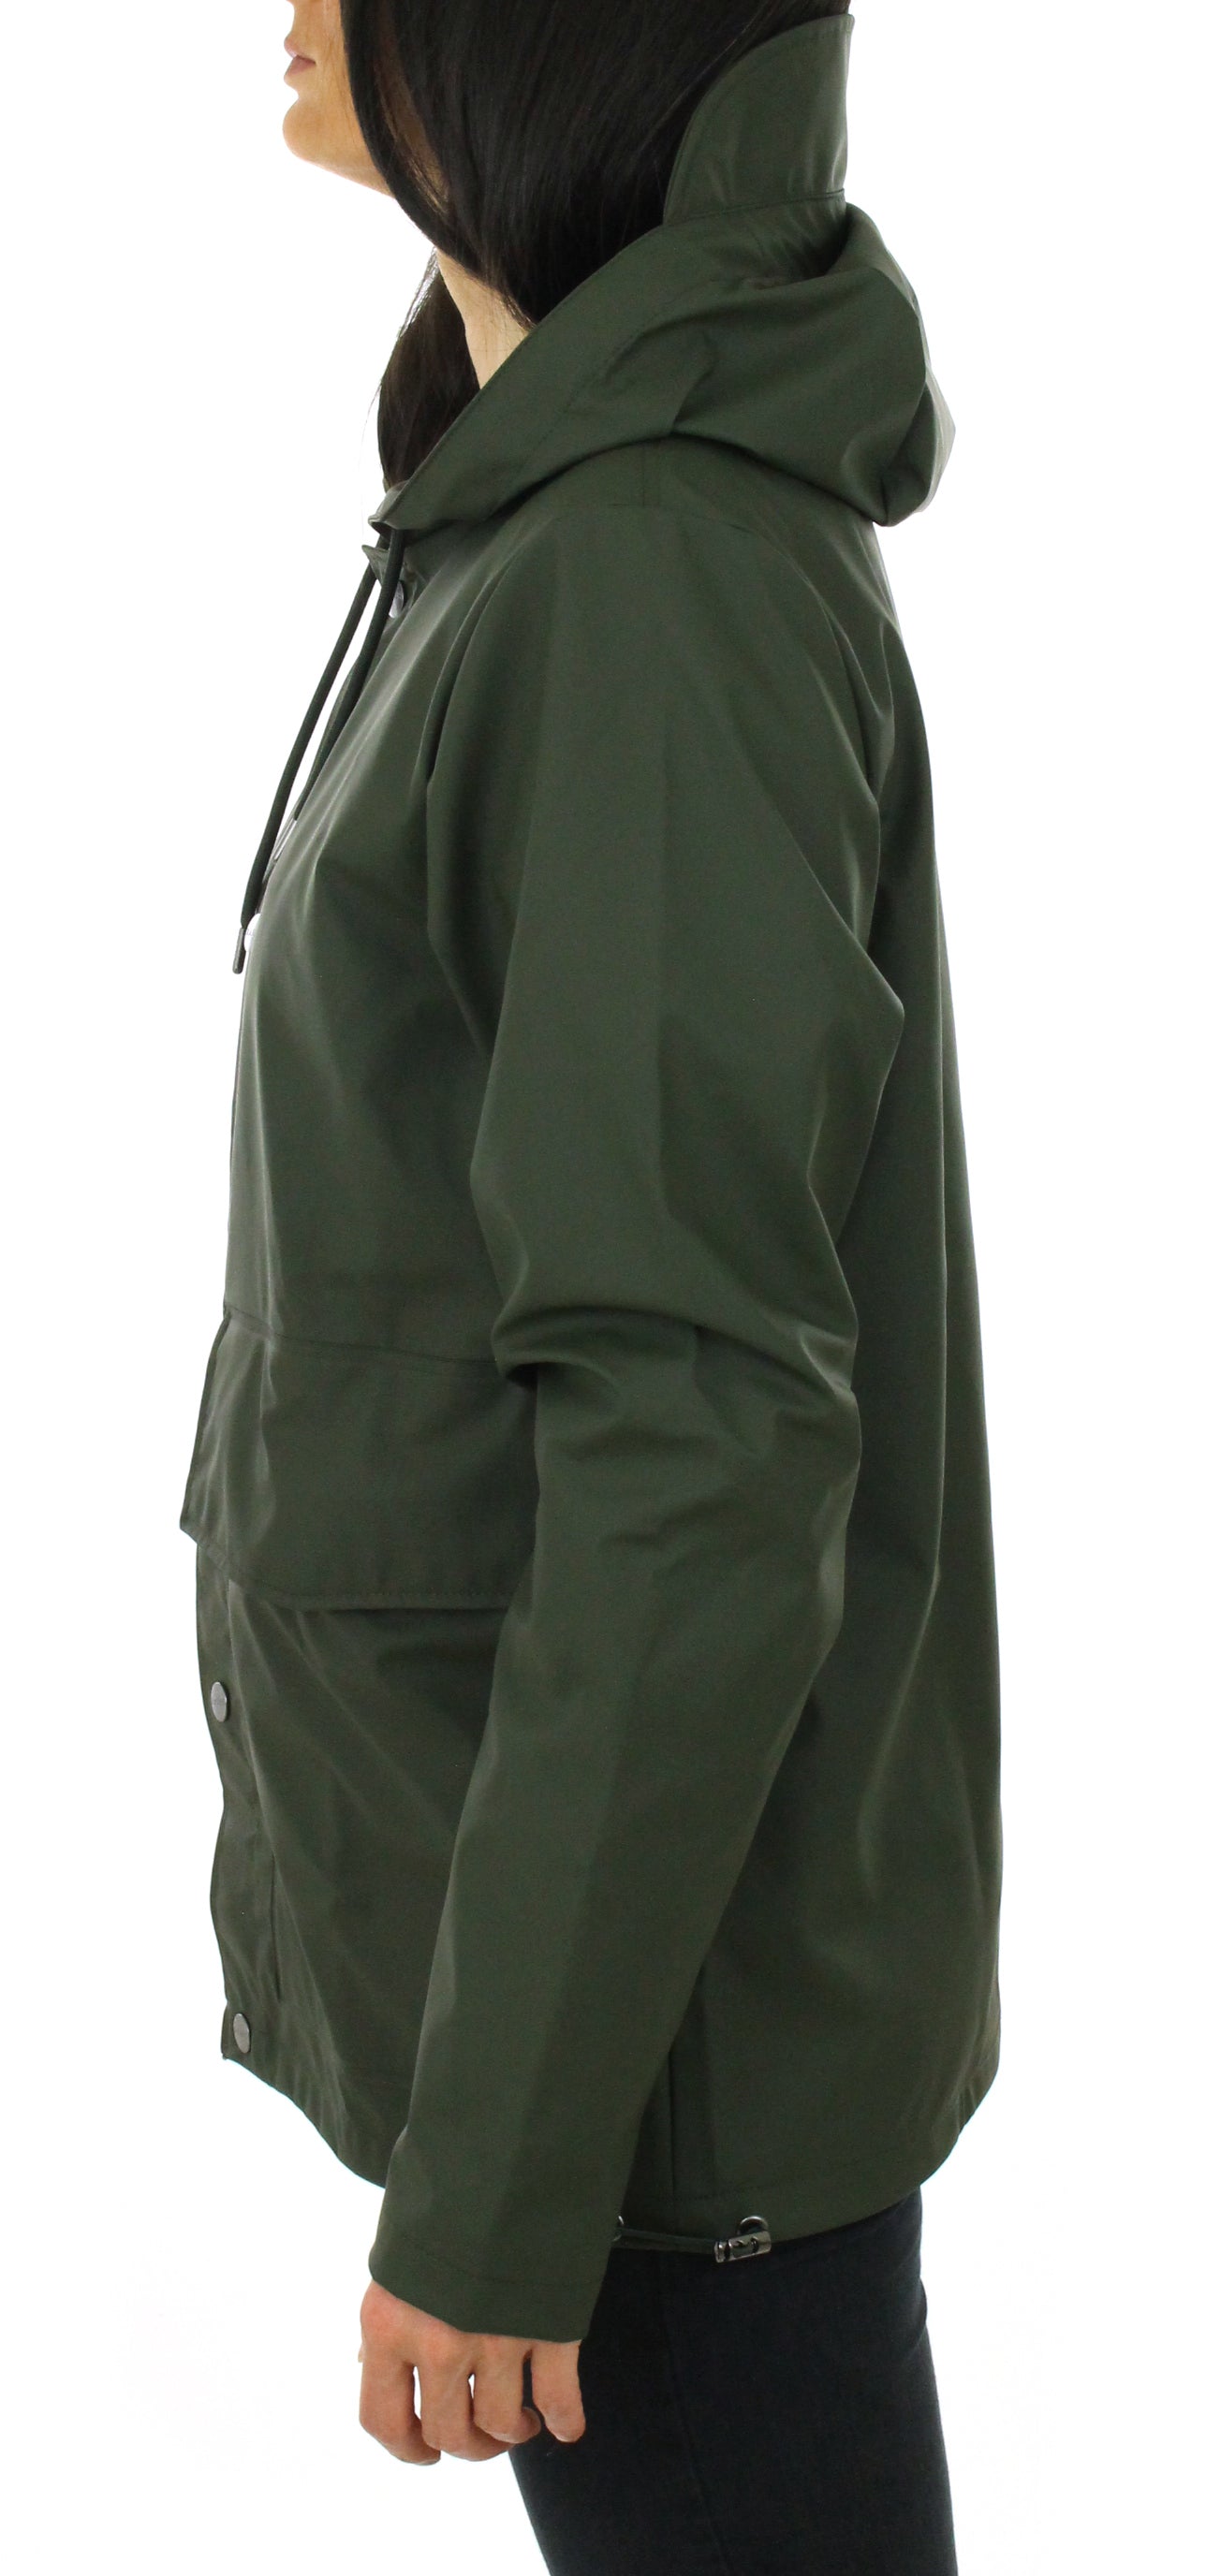 Waterproof Jacket Unisex 1826 green